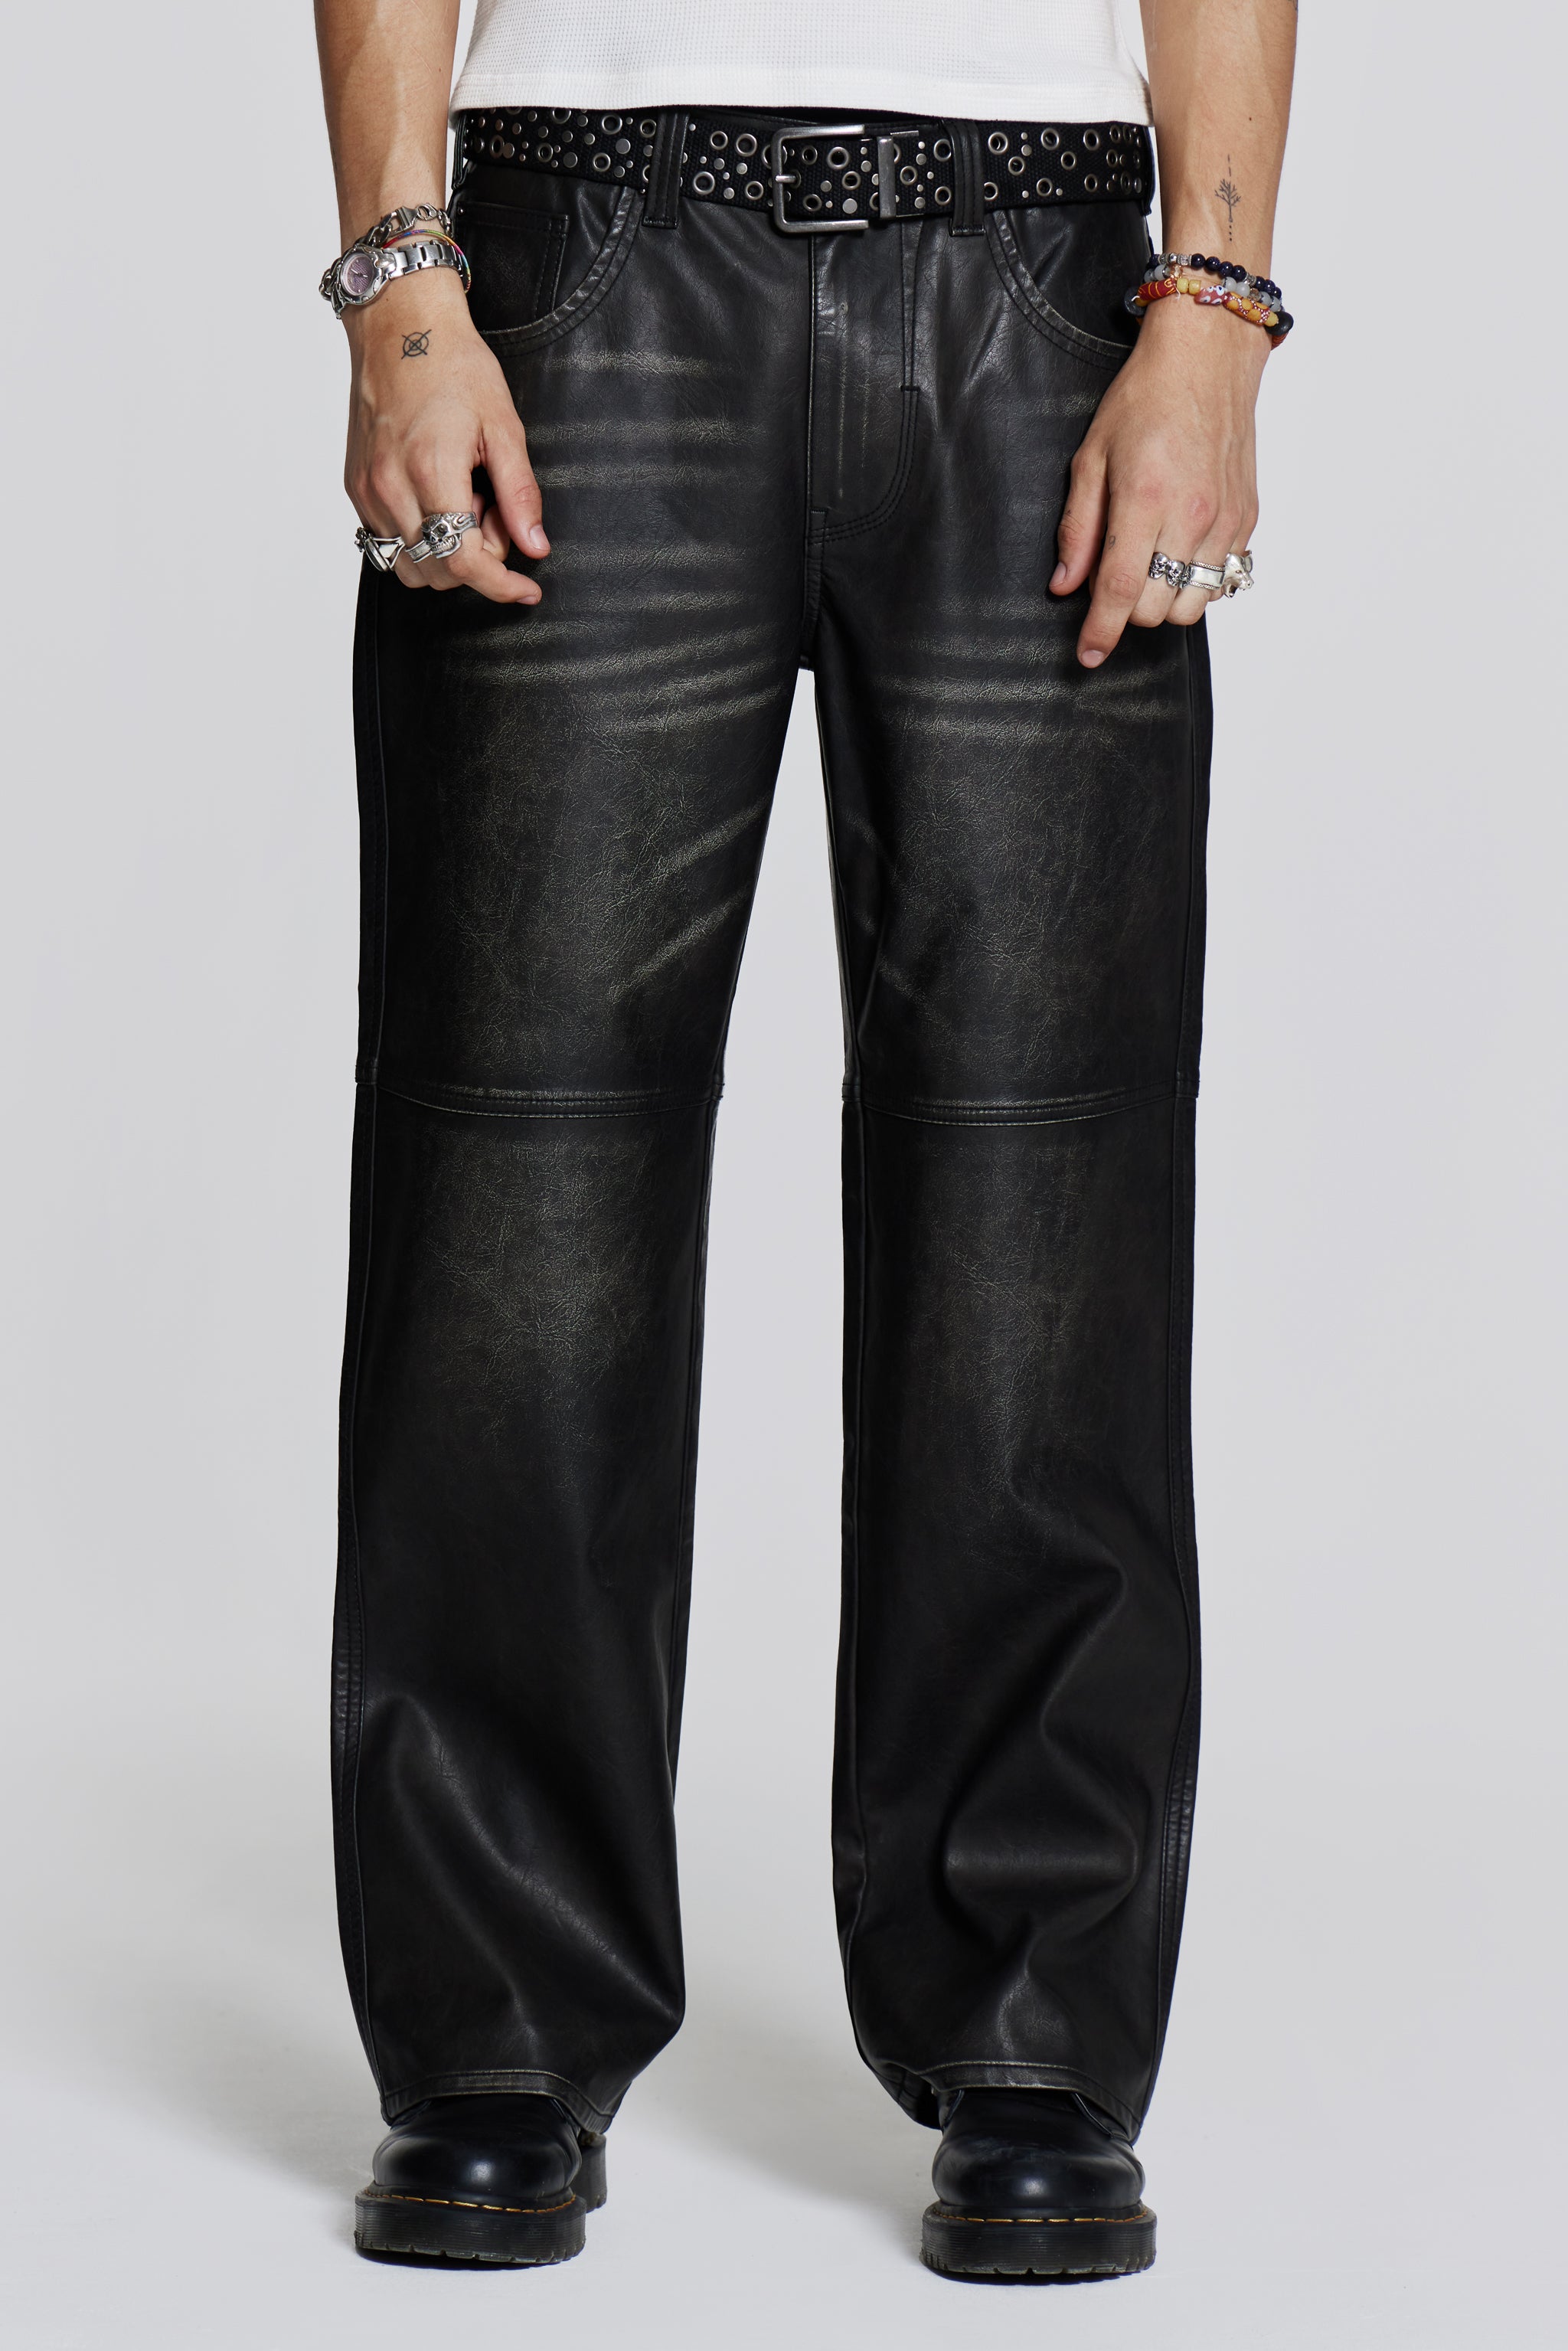 Jaded London Leather Pants - REVOLVE